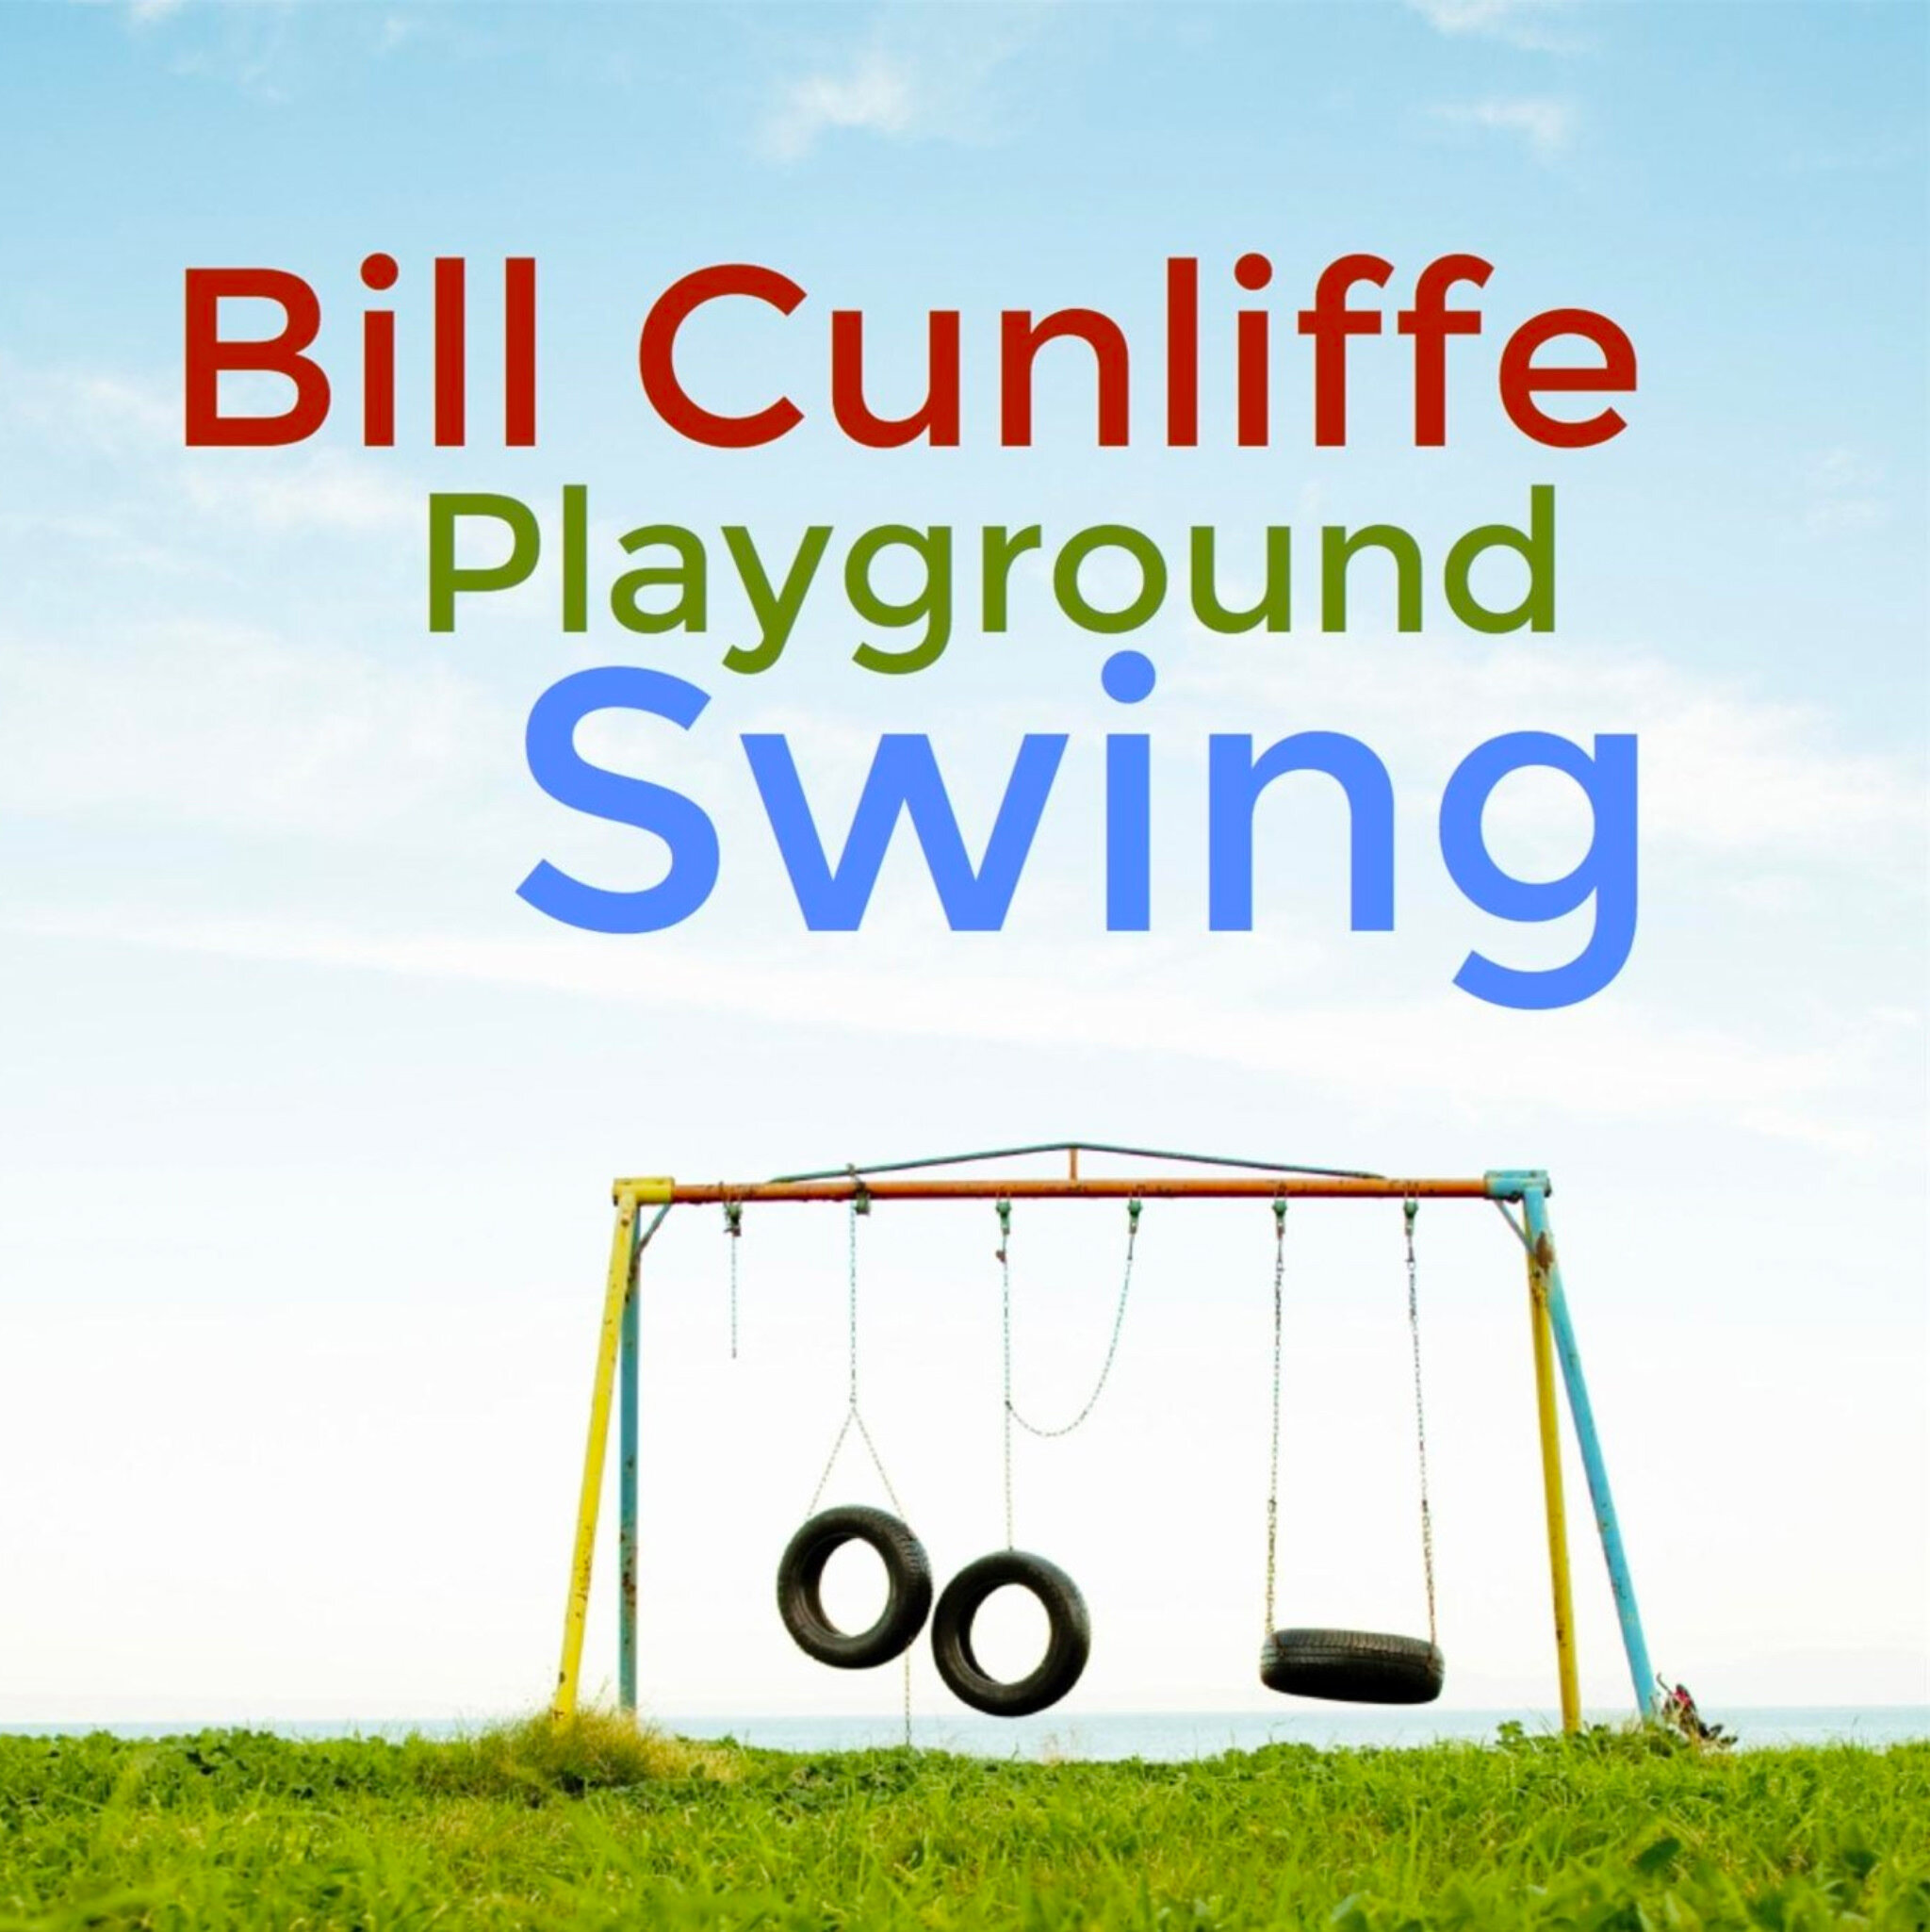 playground-swing-bill-cunliffe-2015-01.jpg